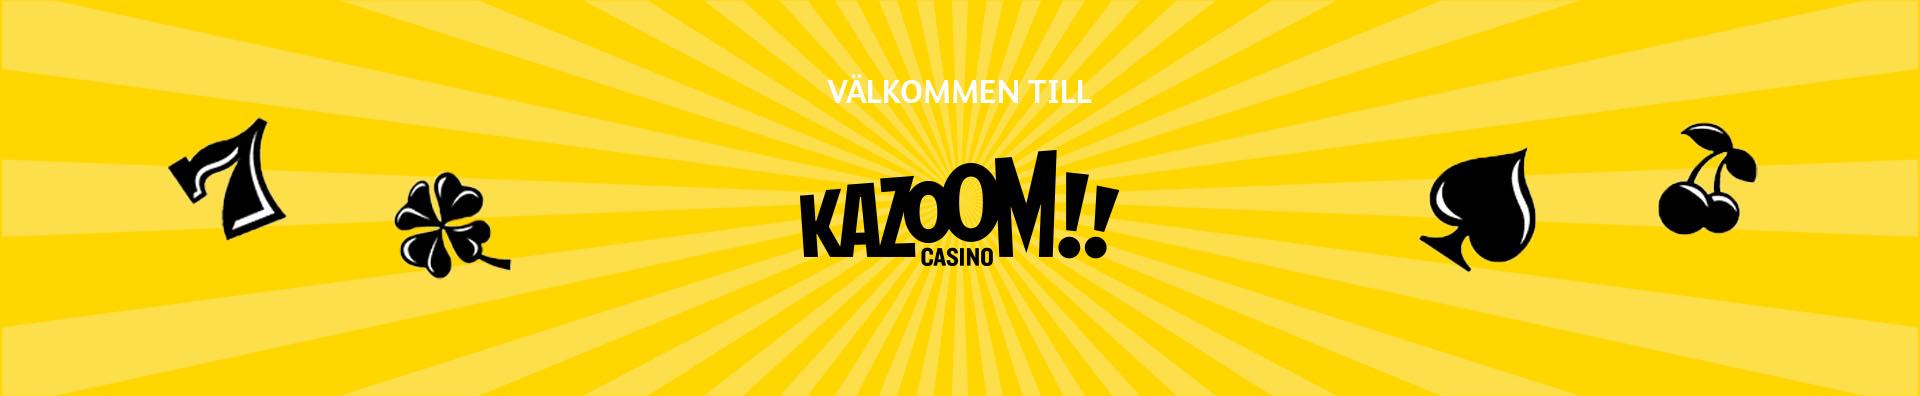 Kazoom Casino - recension